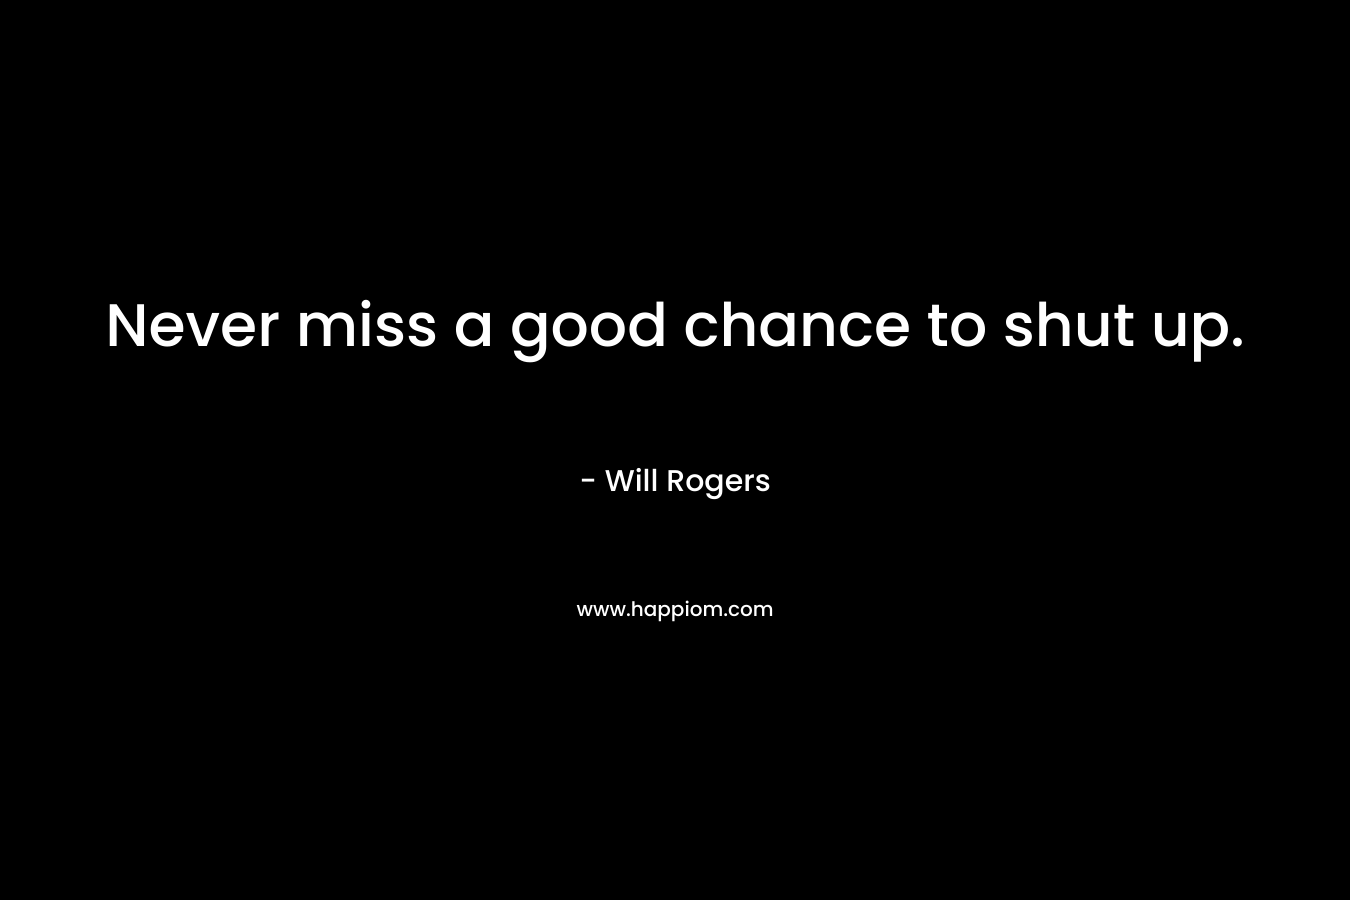 Never miss a good chance to shut up.